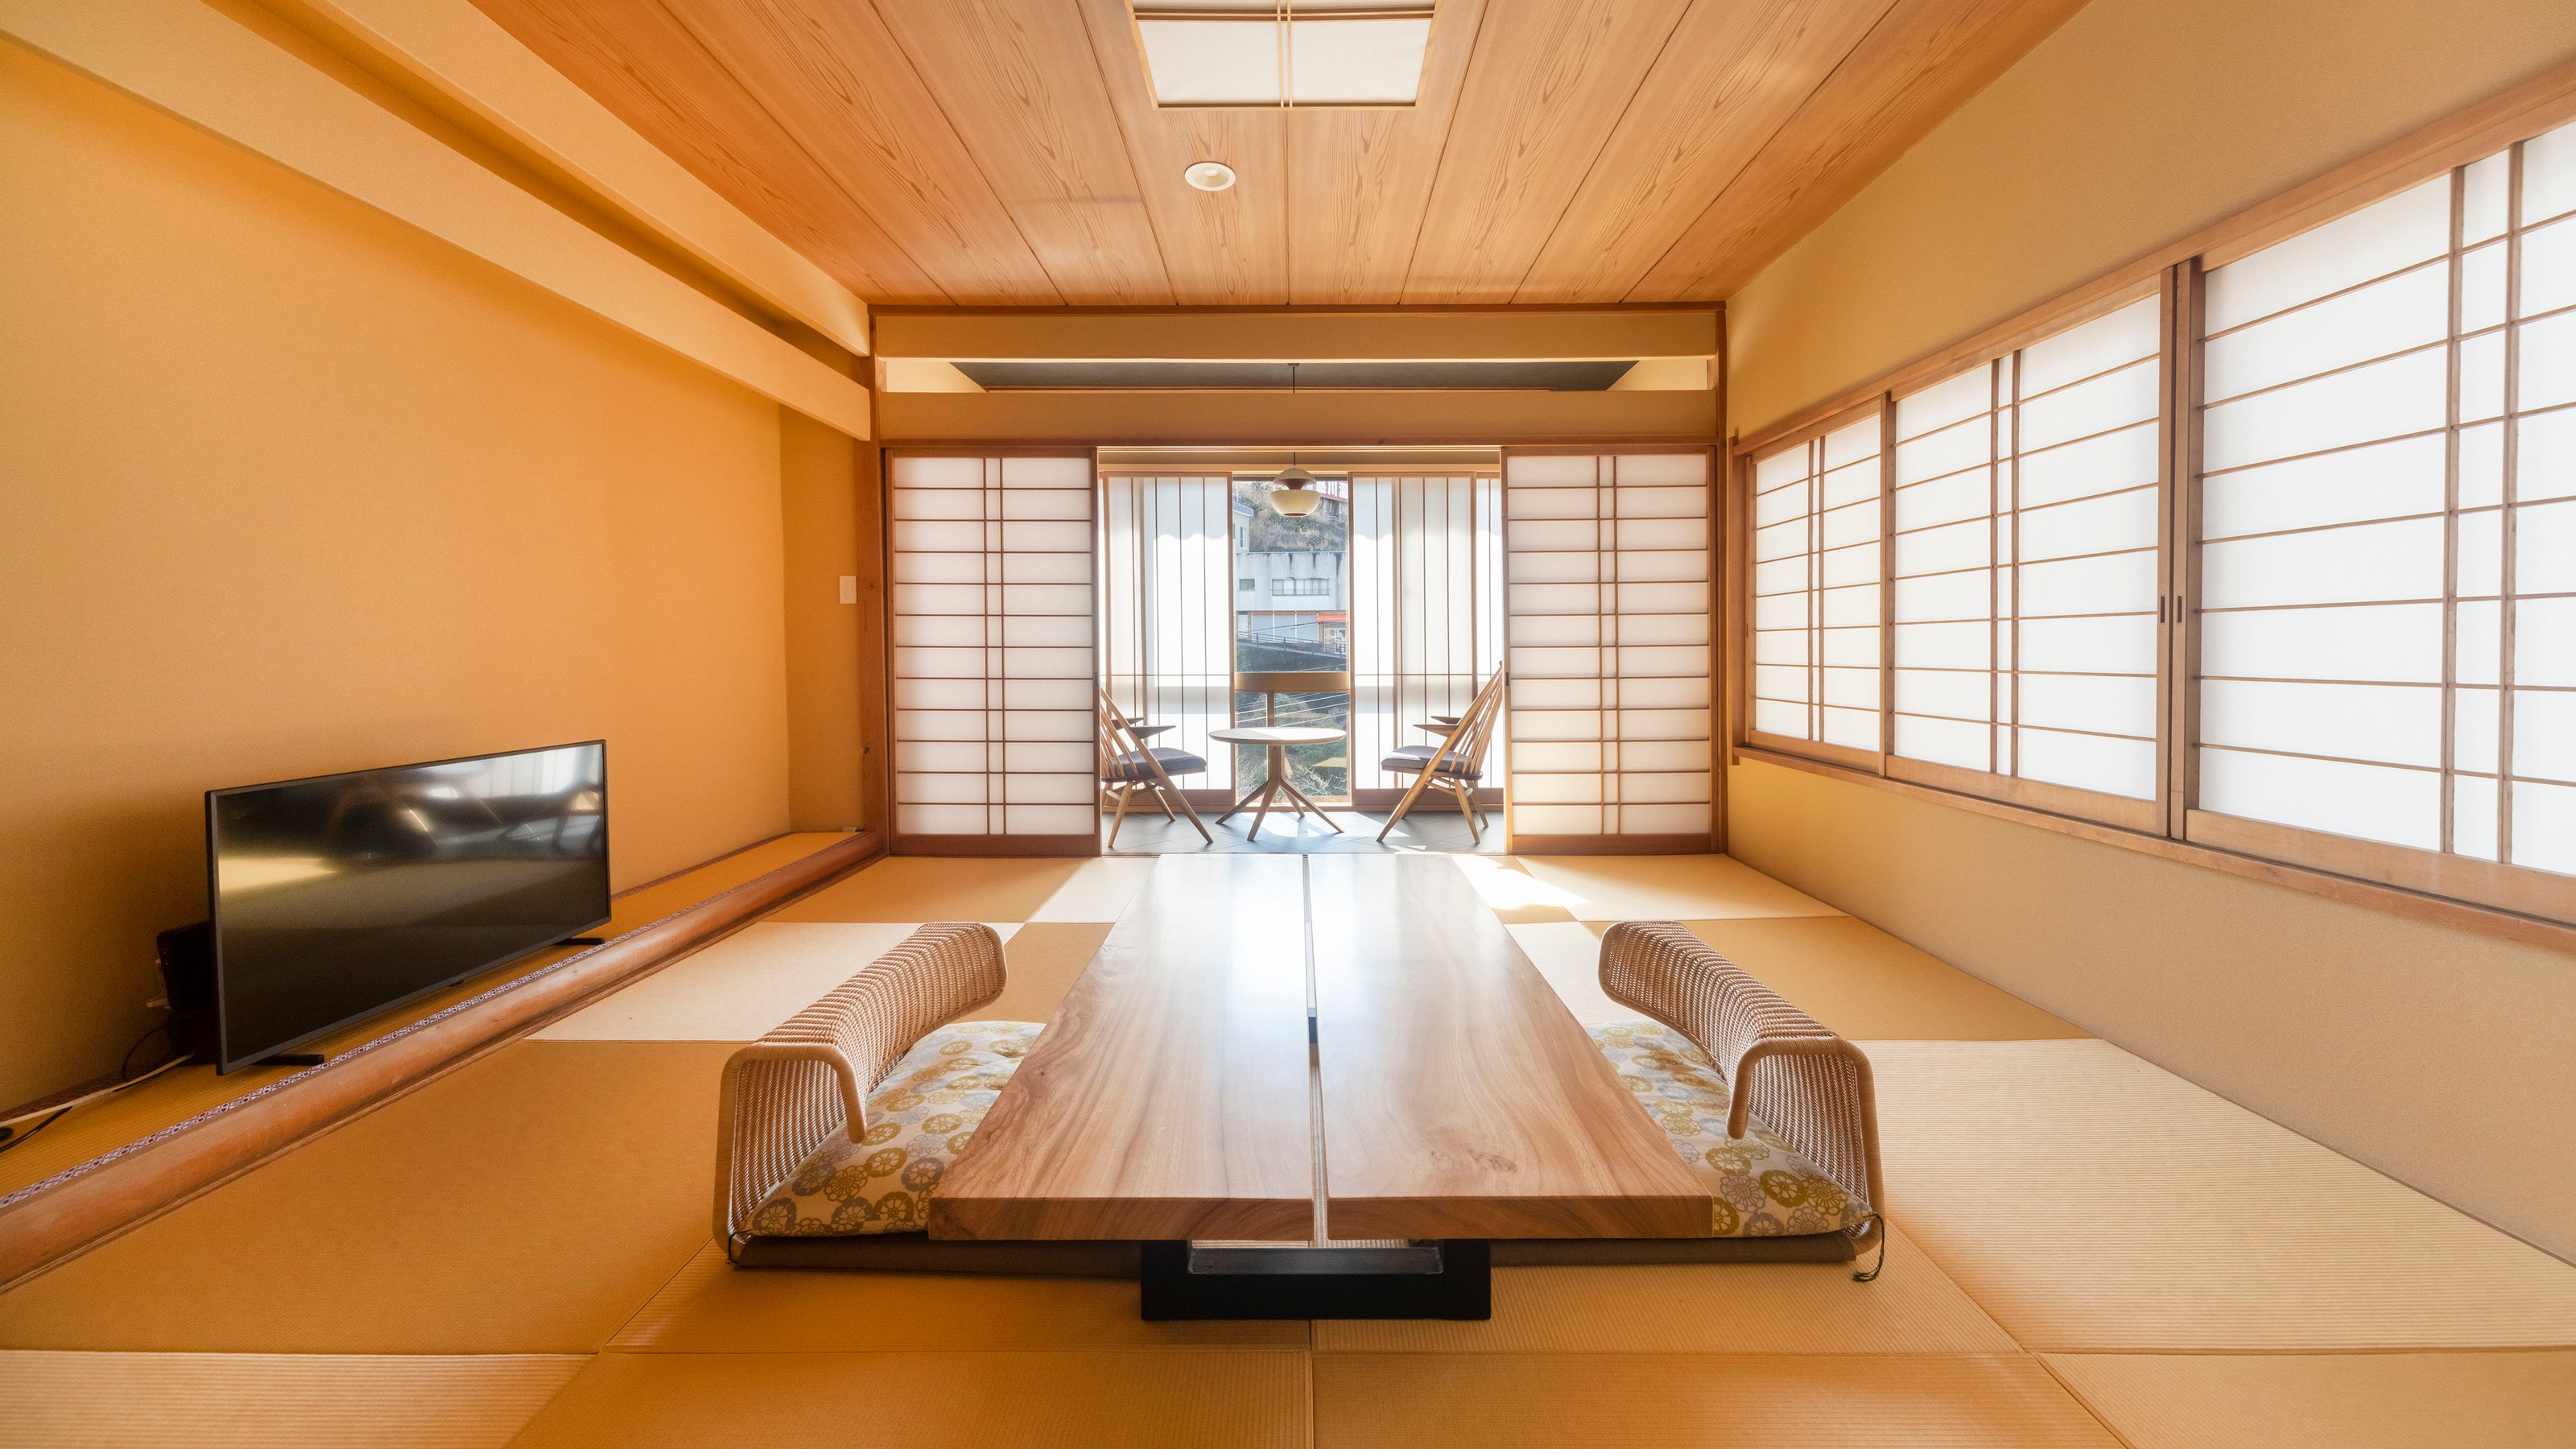 Standard Japanese room 10 tatami mats